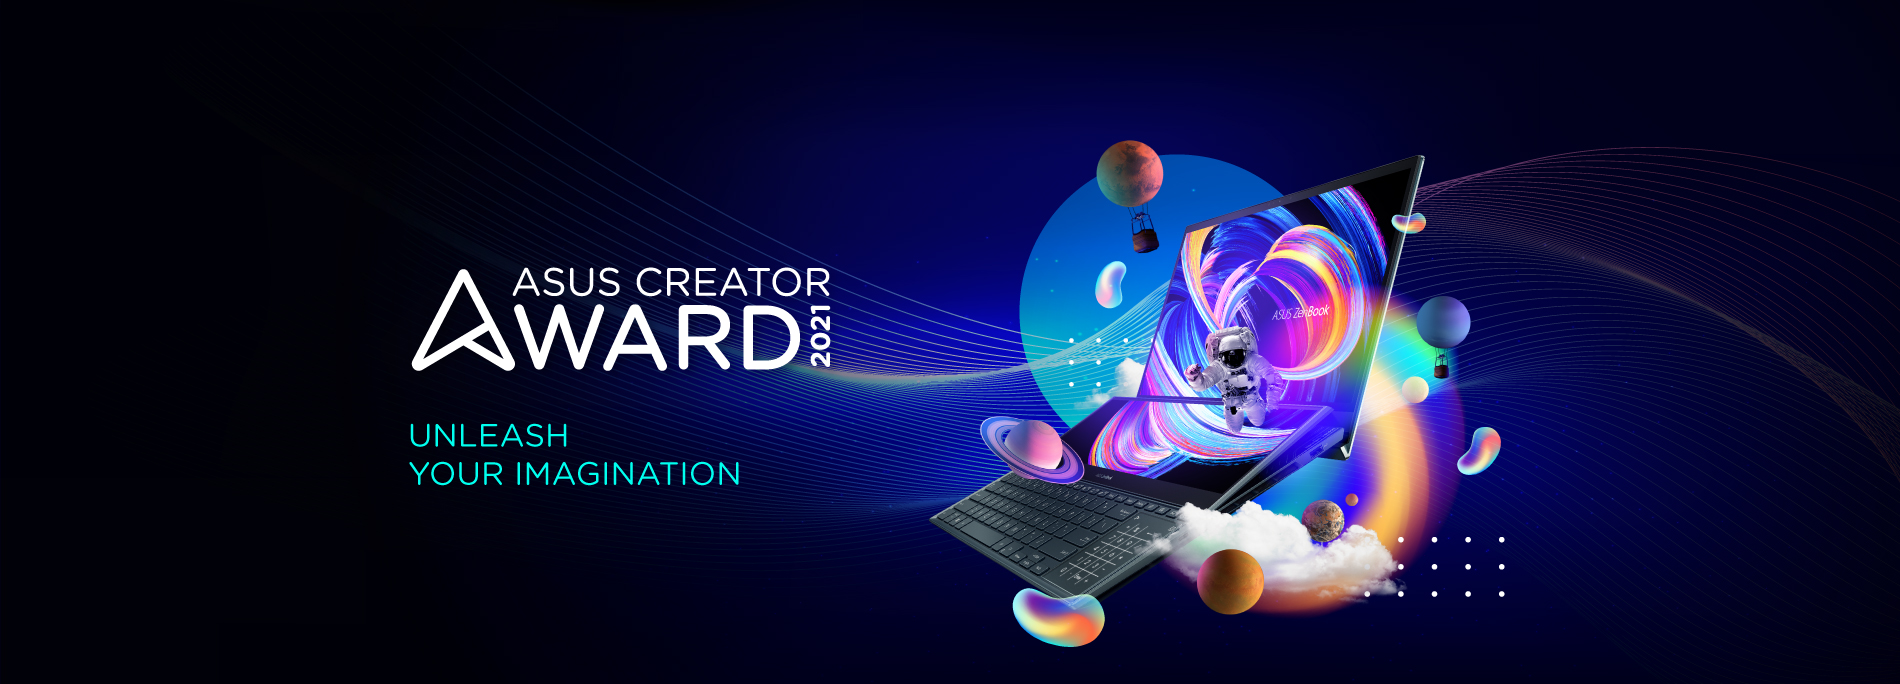 ASUS Creator Award 2021: Unleash Your Imagination